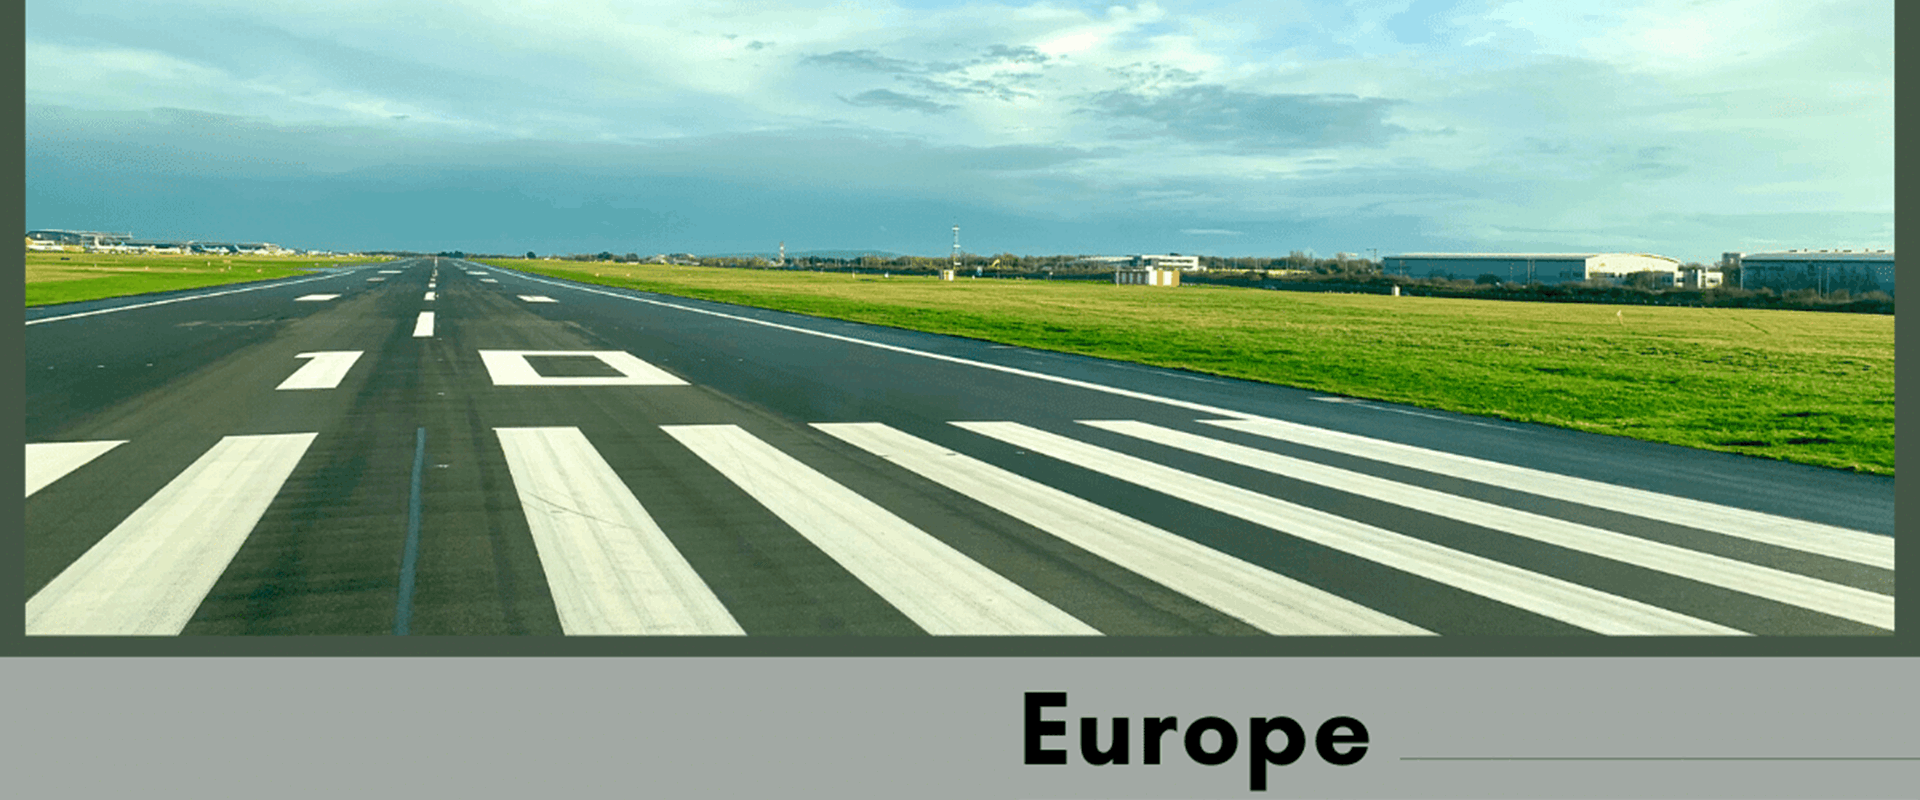 Understanding Europes Travel Regulations